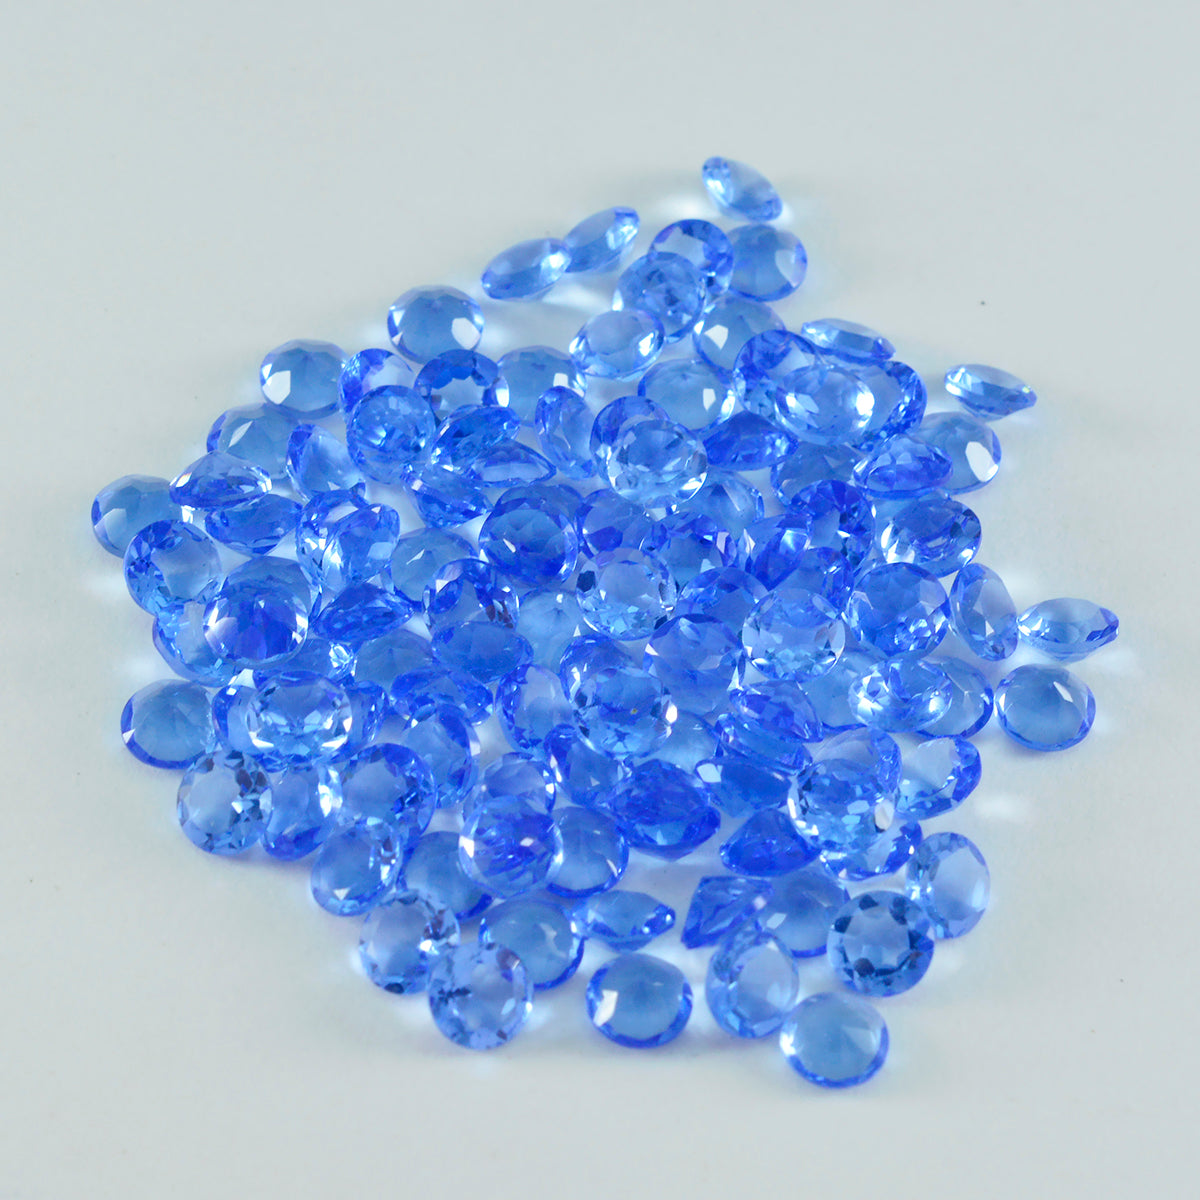 riyogems 1pc ブルー サファイア CZ ファセット 2x2 mm ラウンド形状素晴らしい品質ルース宝石